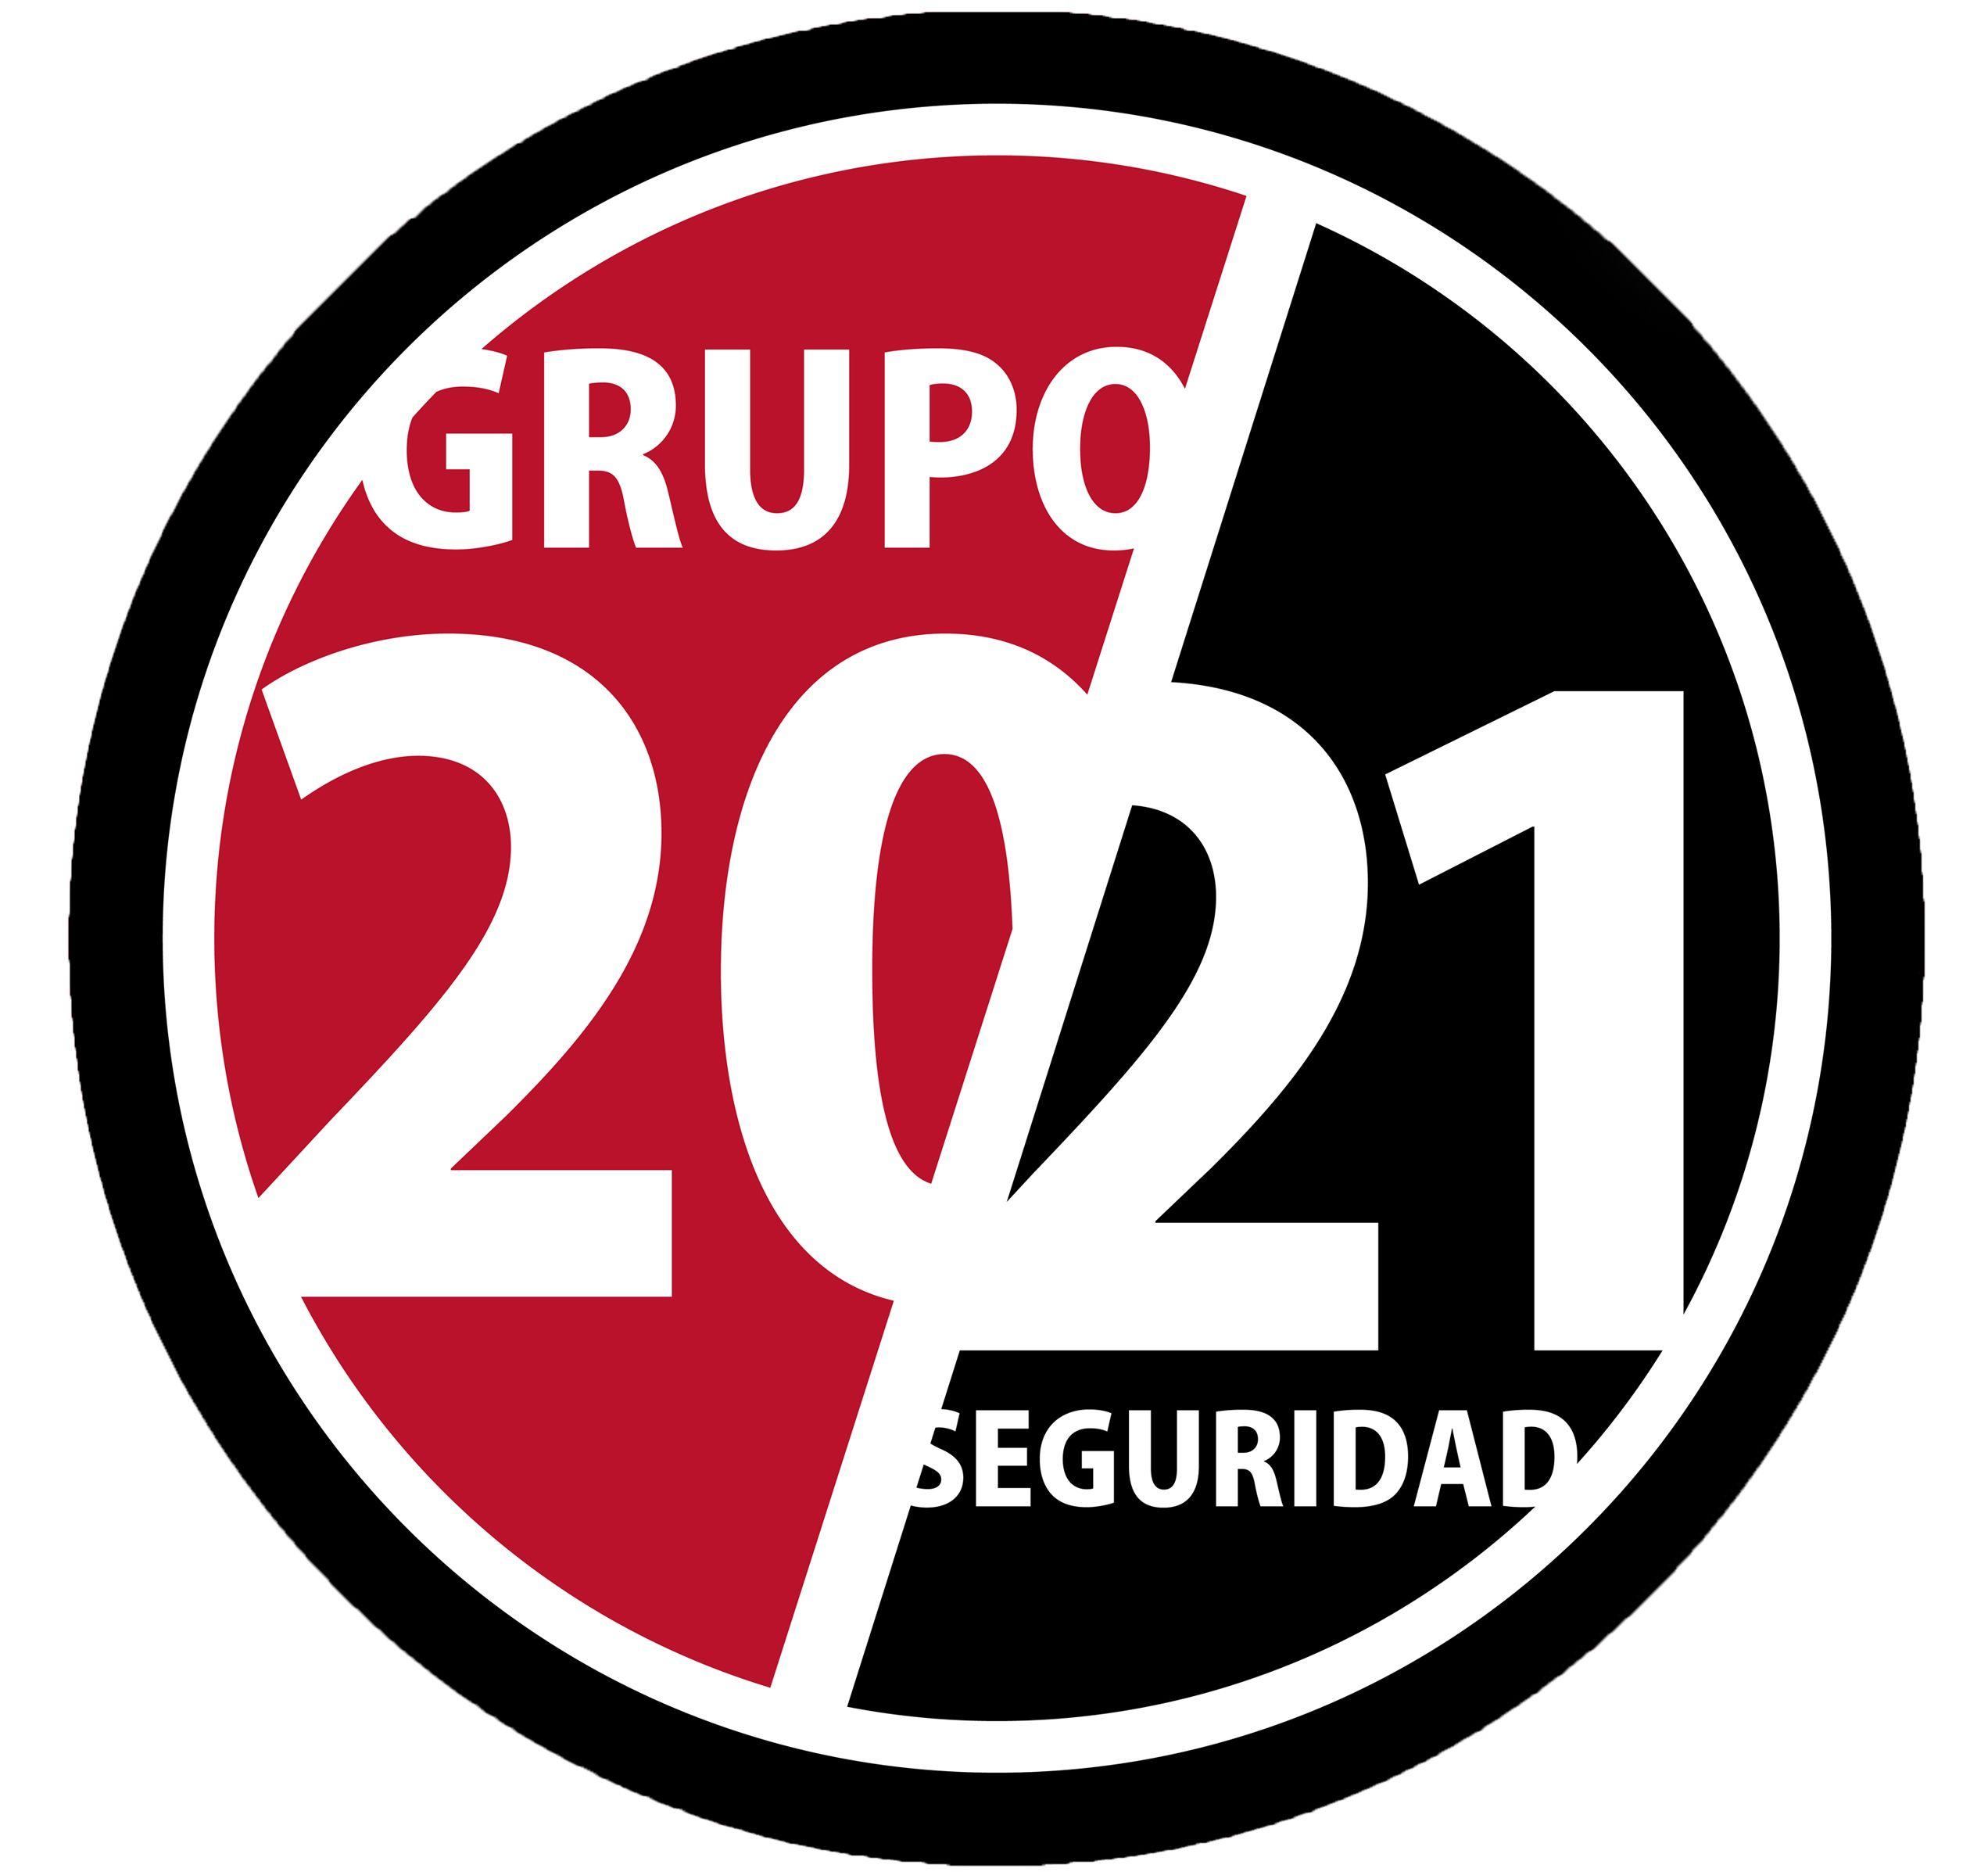 2021 Logo - File:Logo grupo 2021 seguridad.jpg - Wikimedia Commons